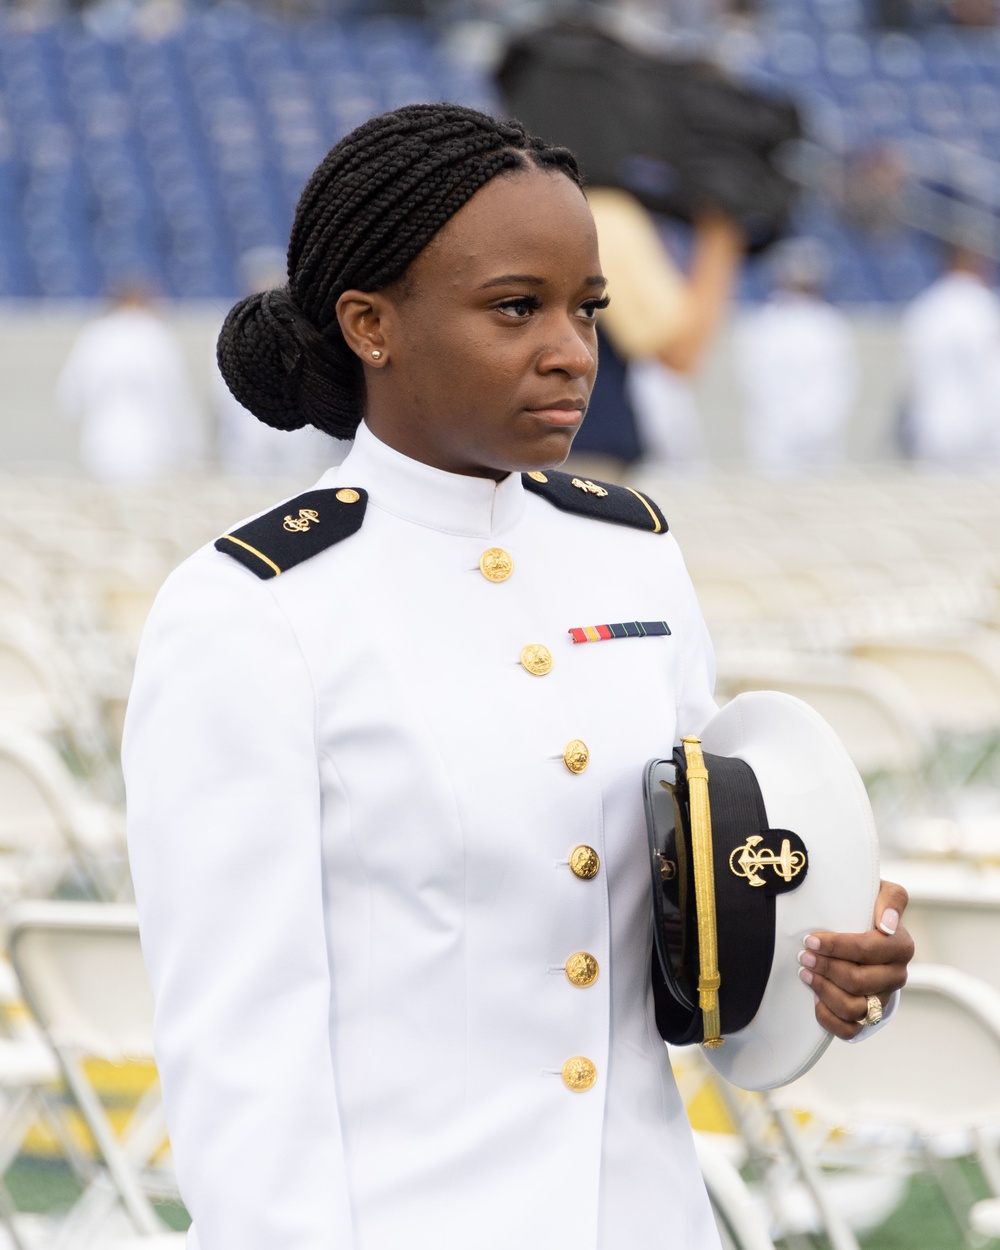 DVIDS Images U.S Naval Academy Class of 2022 Graduation Ceremony